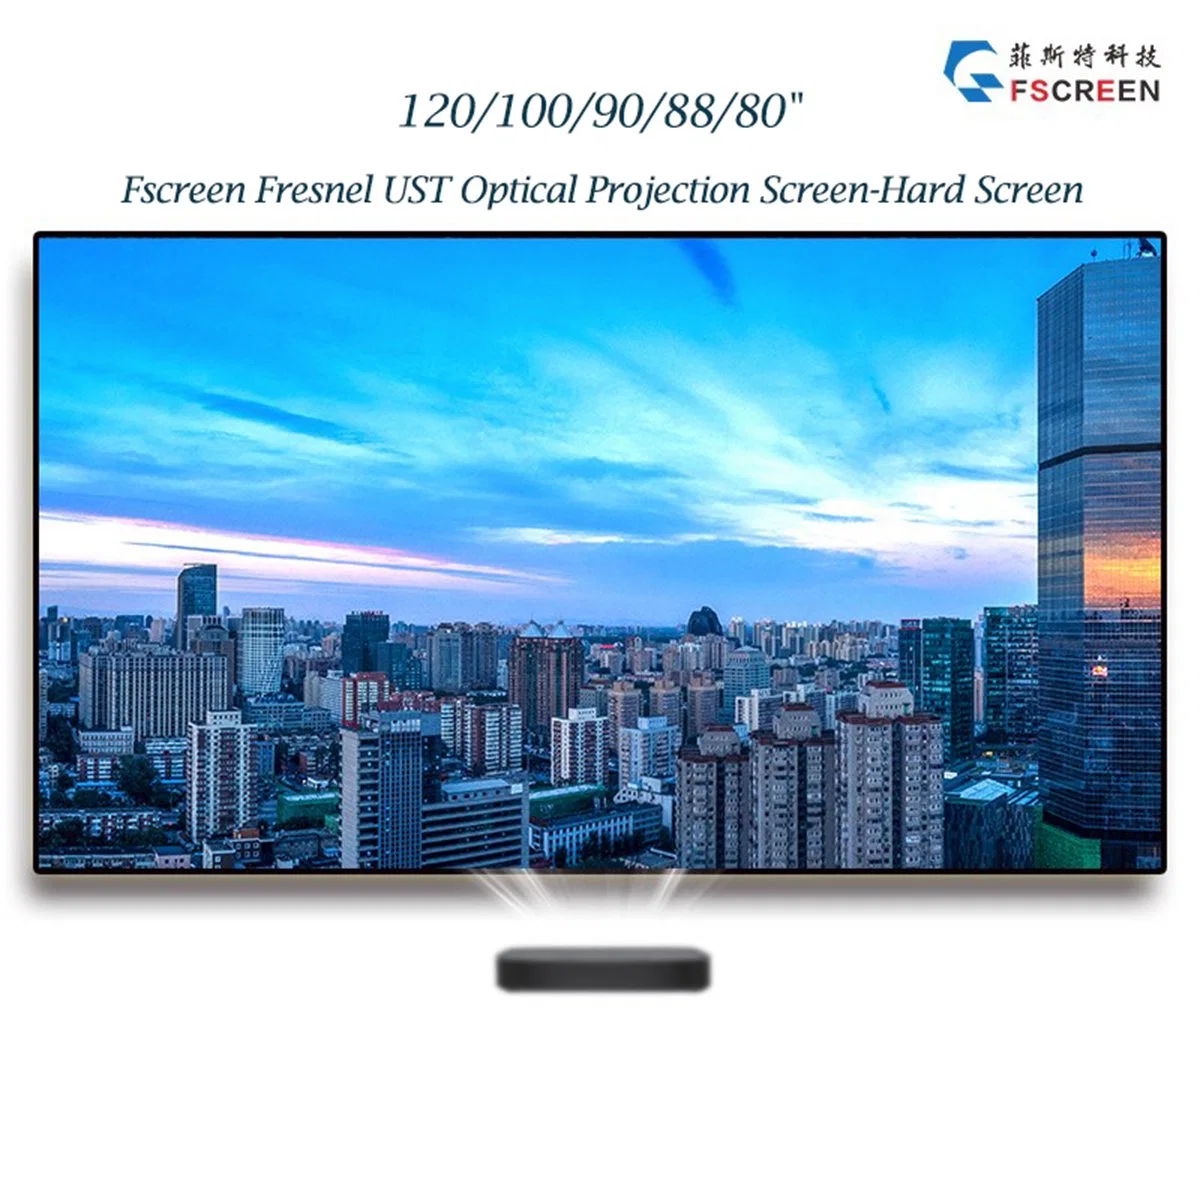 Pantalla de proyección Fresnel ALR de 100 pulgadas pantalla dura para proyector Ust pantalla de TV láser.